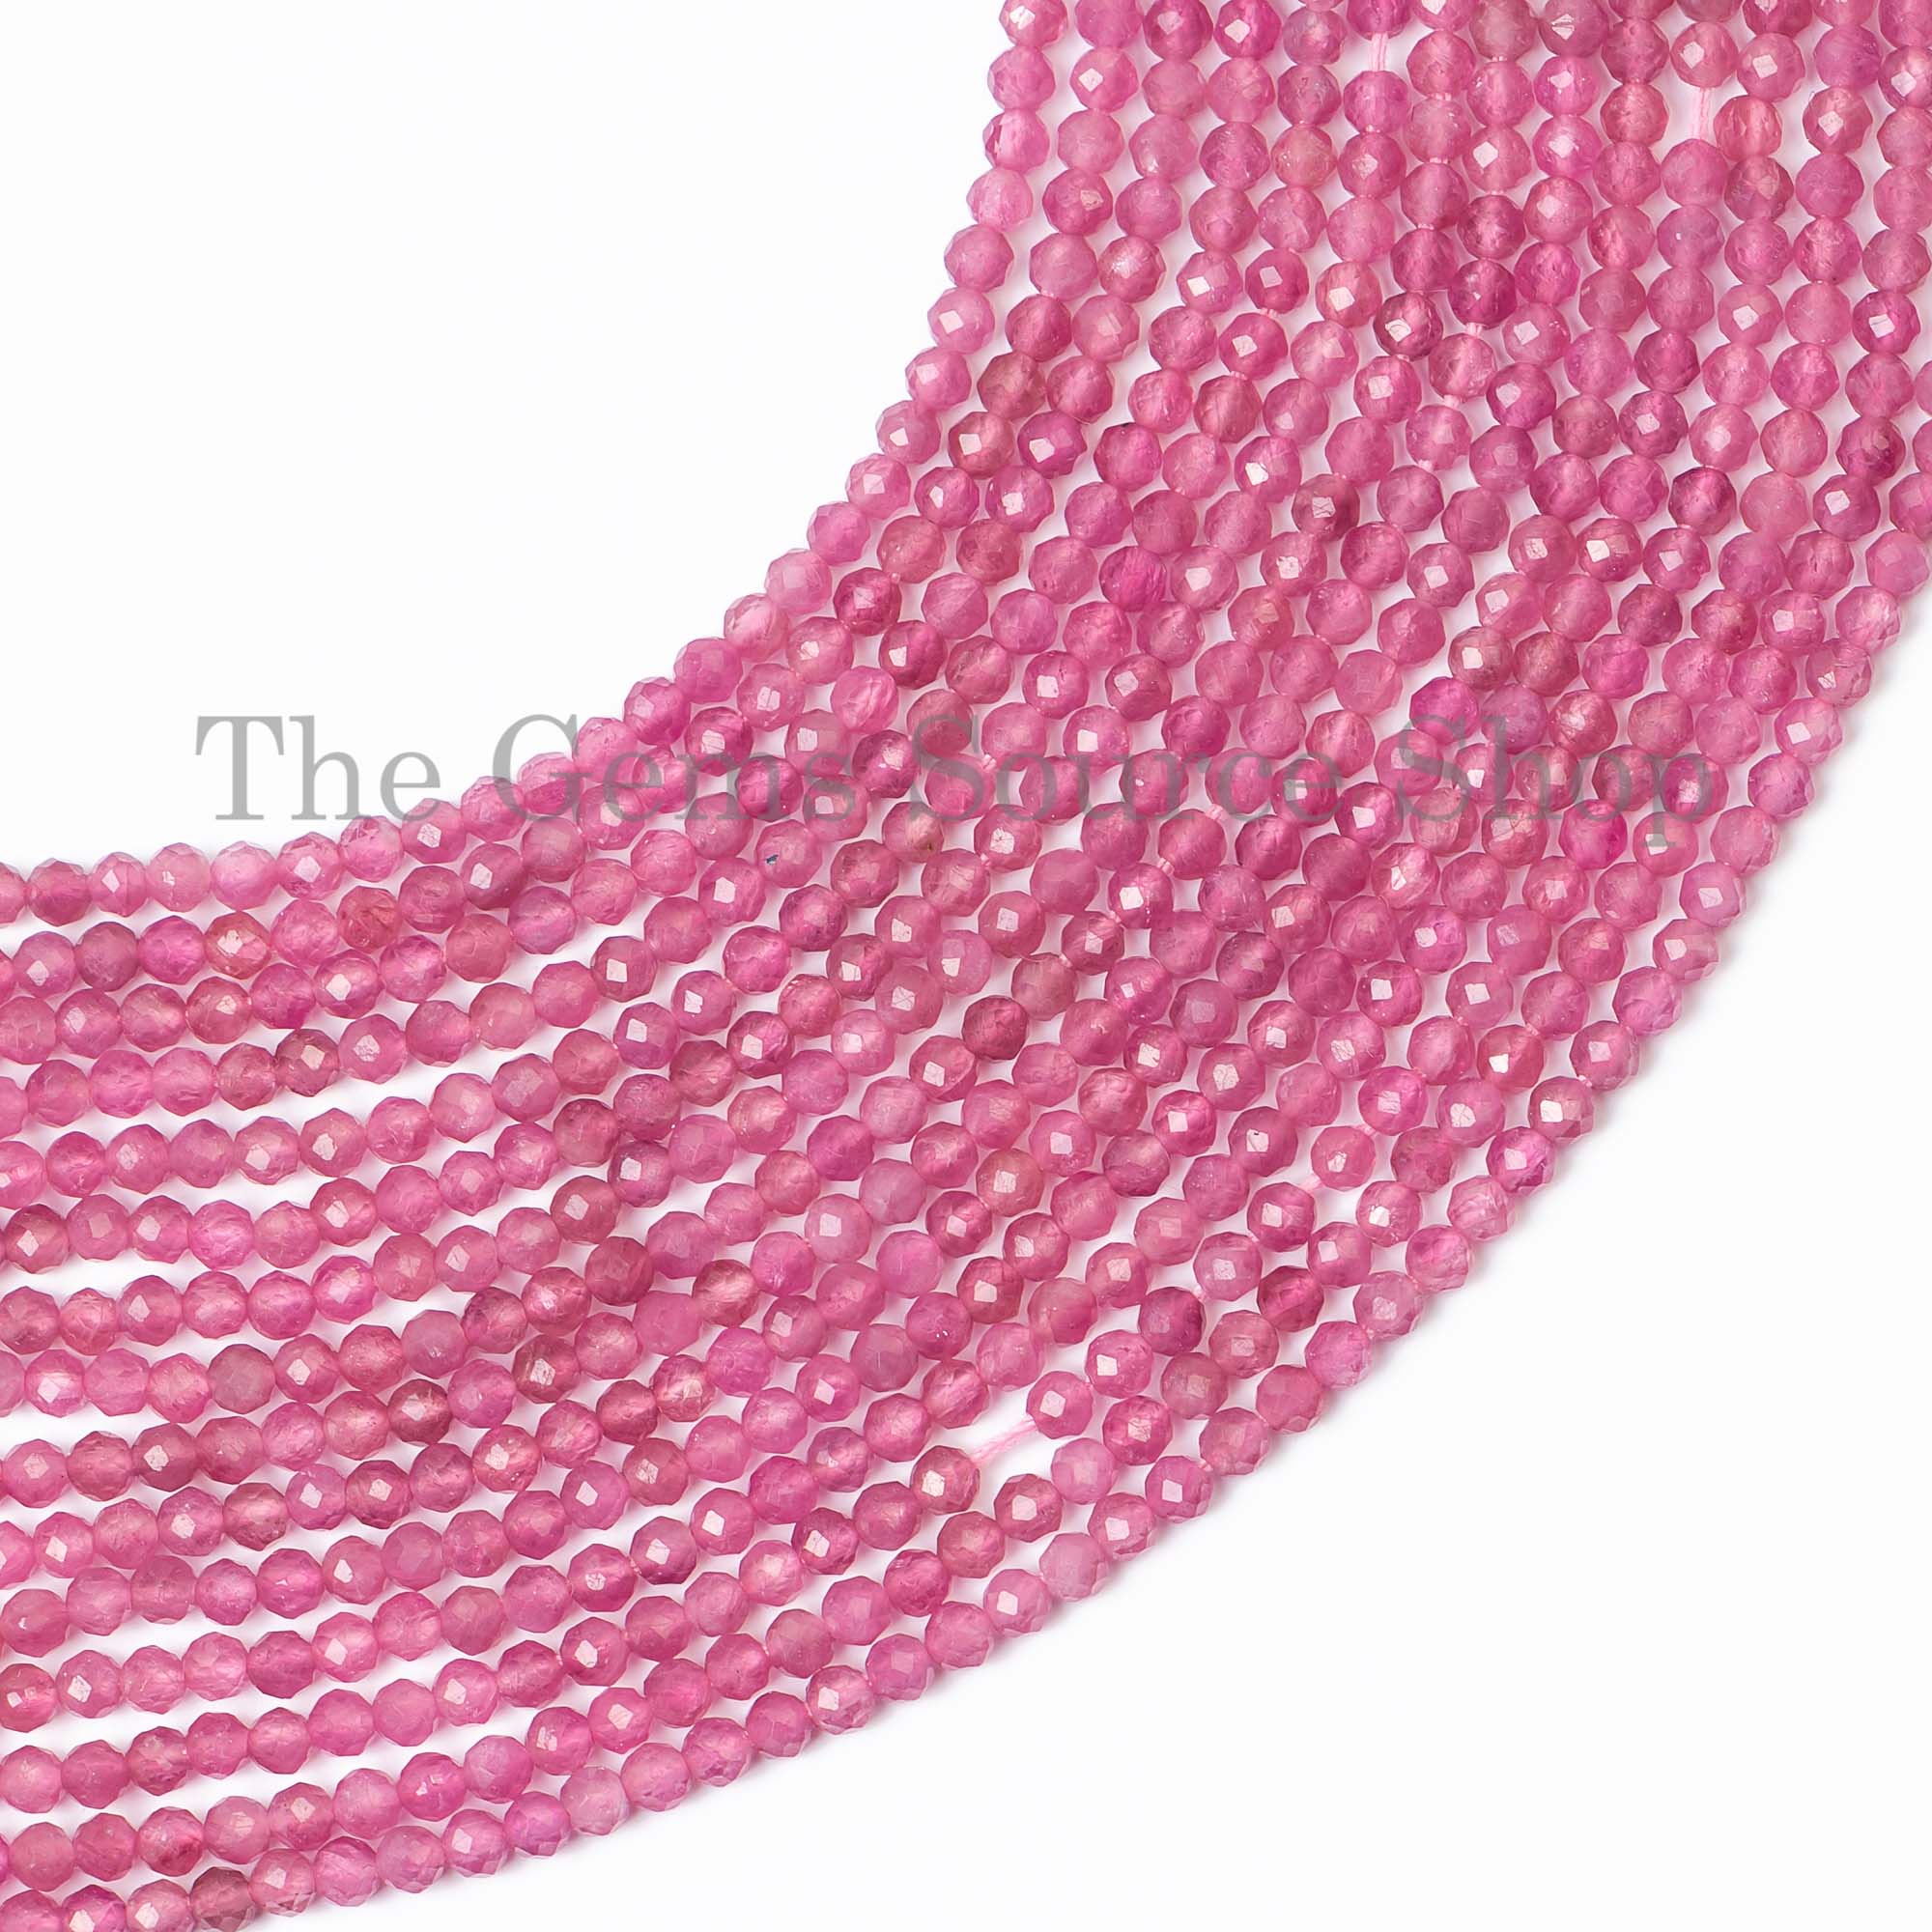 Pink Tourmaline Beads, Tourmaline Faceted Beads, Tourmaline Rondelle Shape Beads, Tourmaline Gemstone